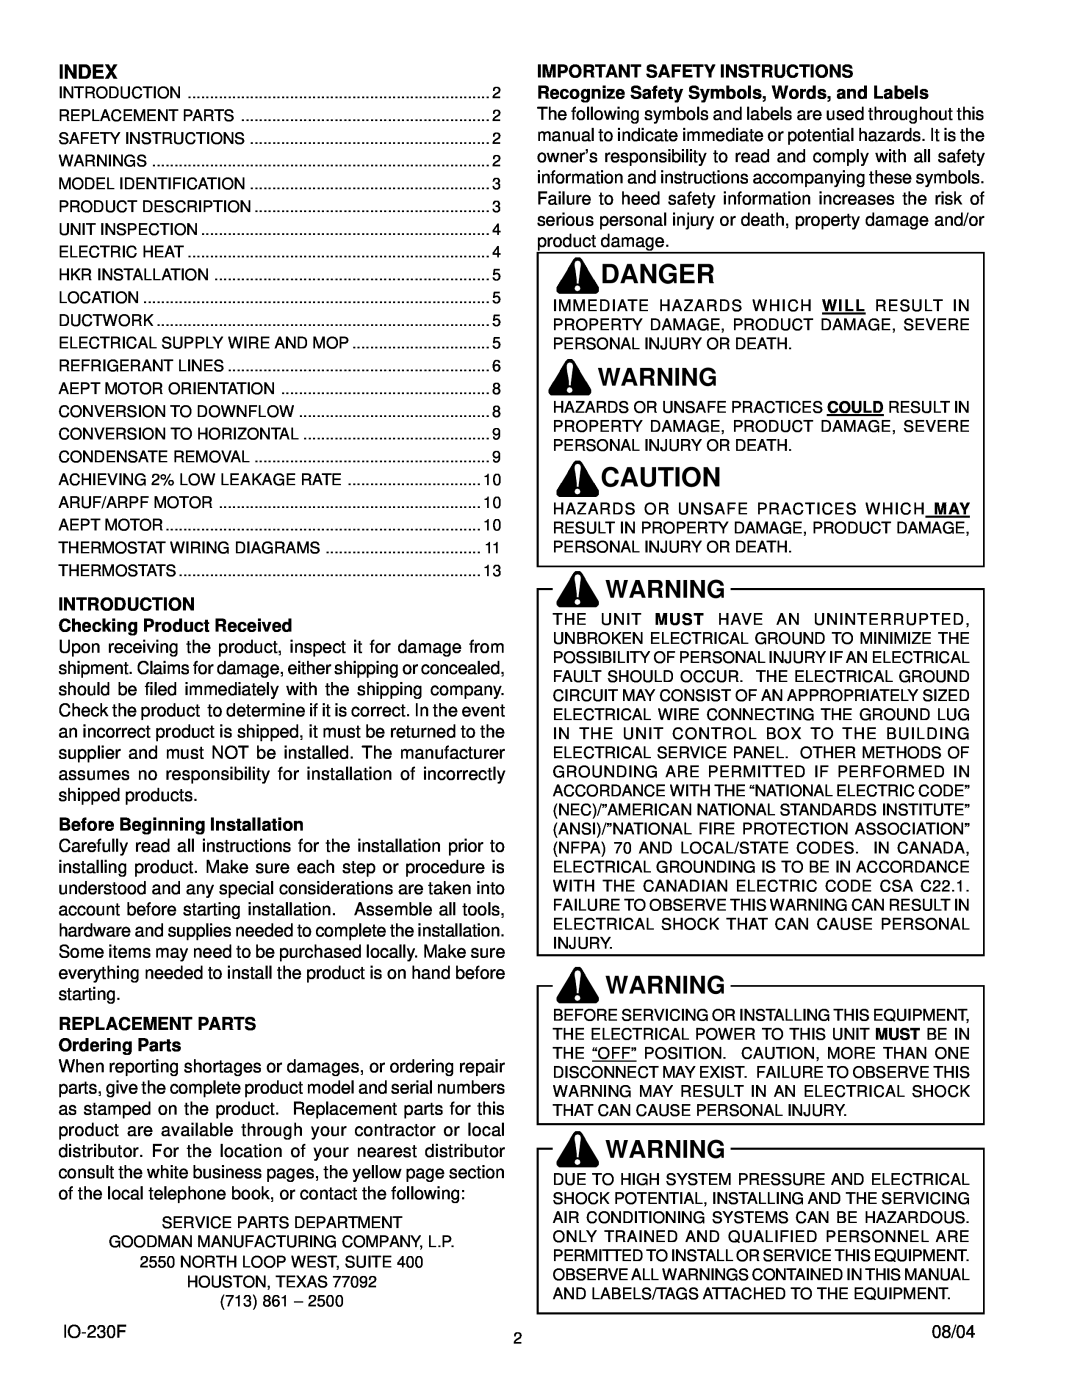 Goodman Mfg AEPT, ARPT, ARPF operating instructions Danger, Index 